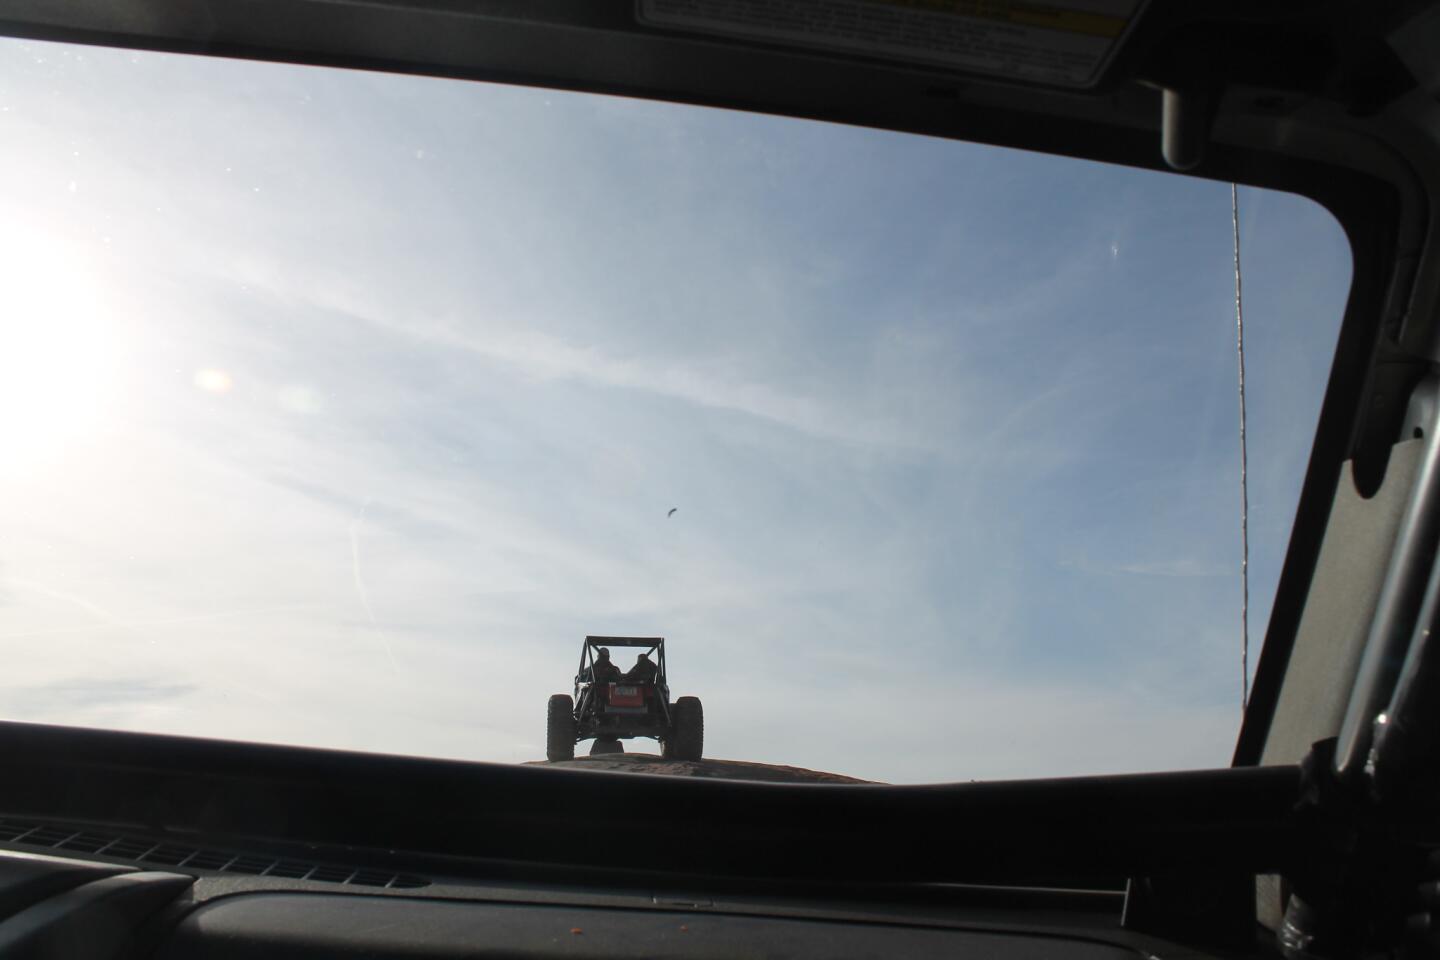 Easter Jeep Safari